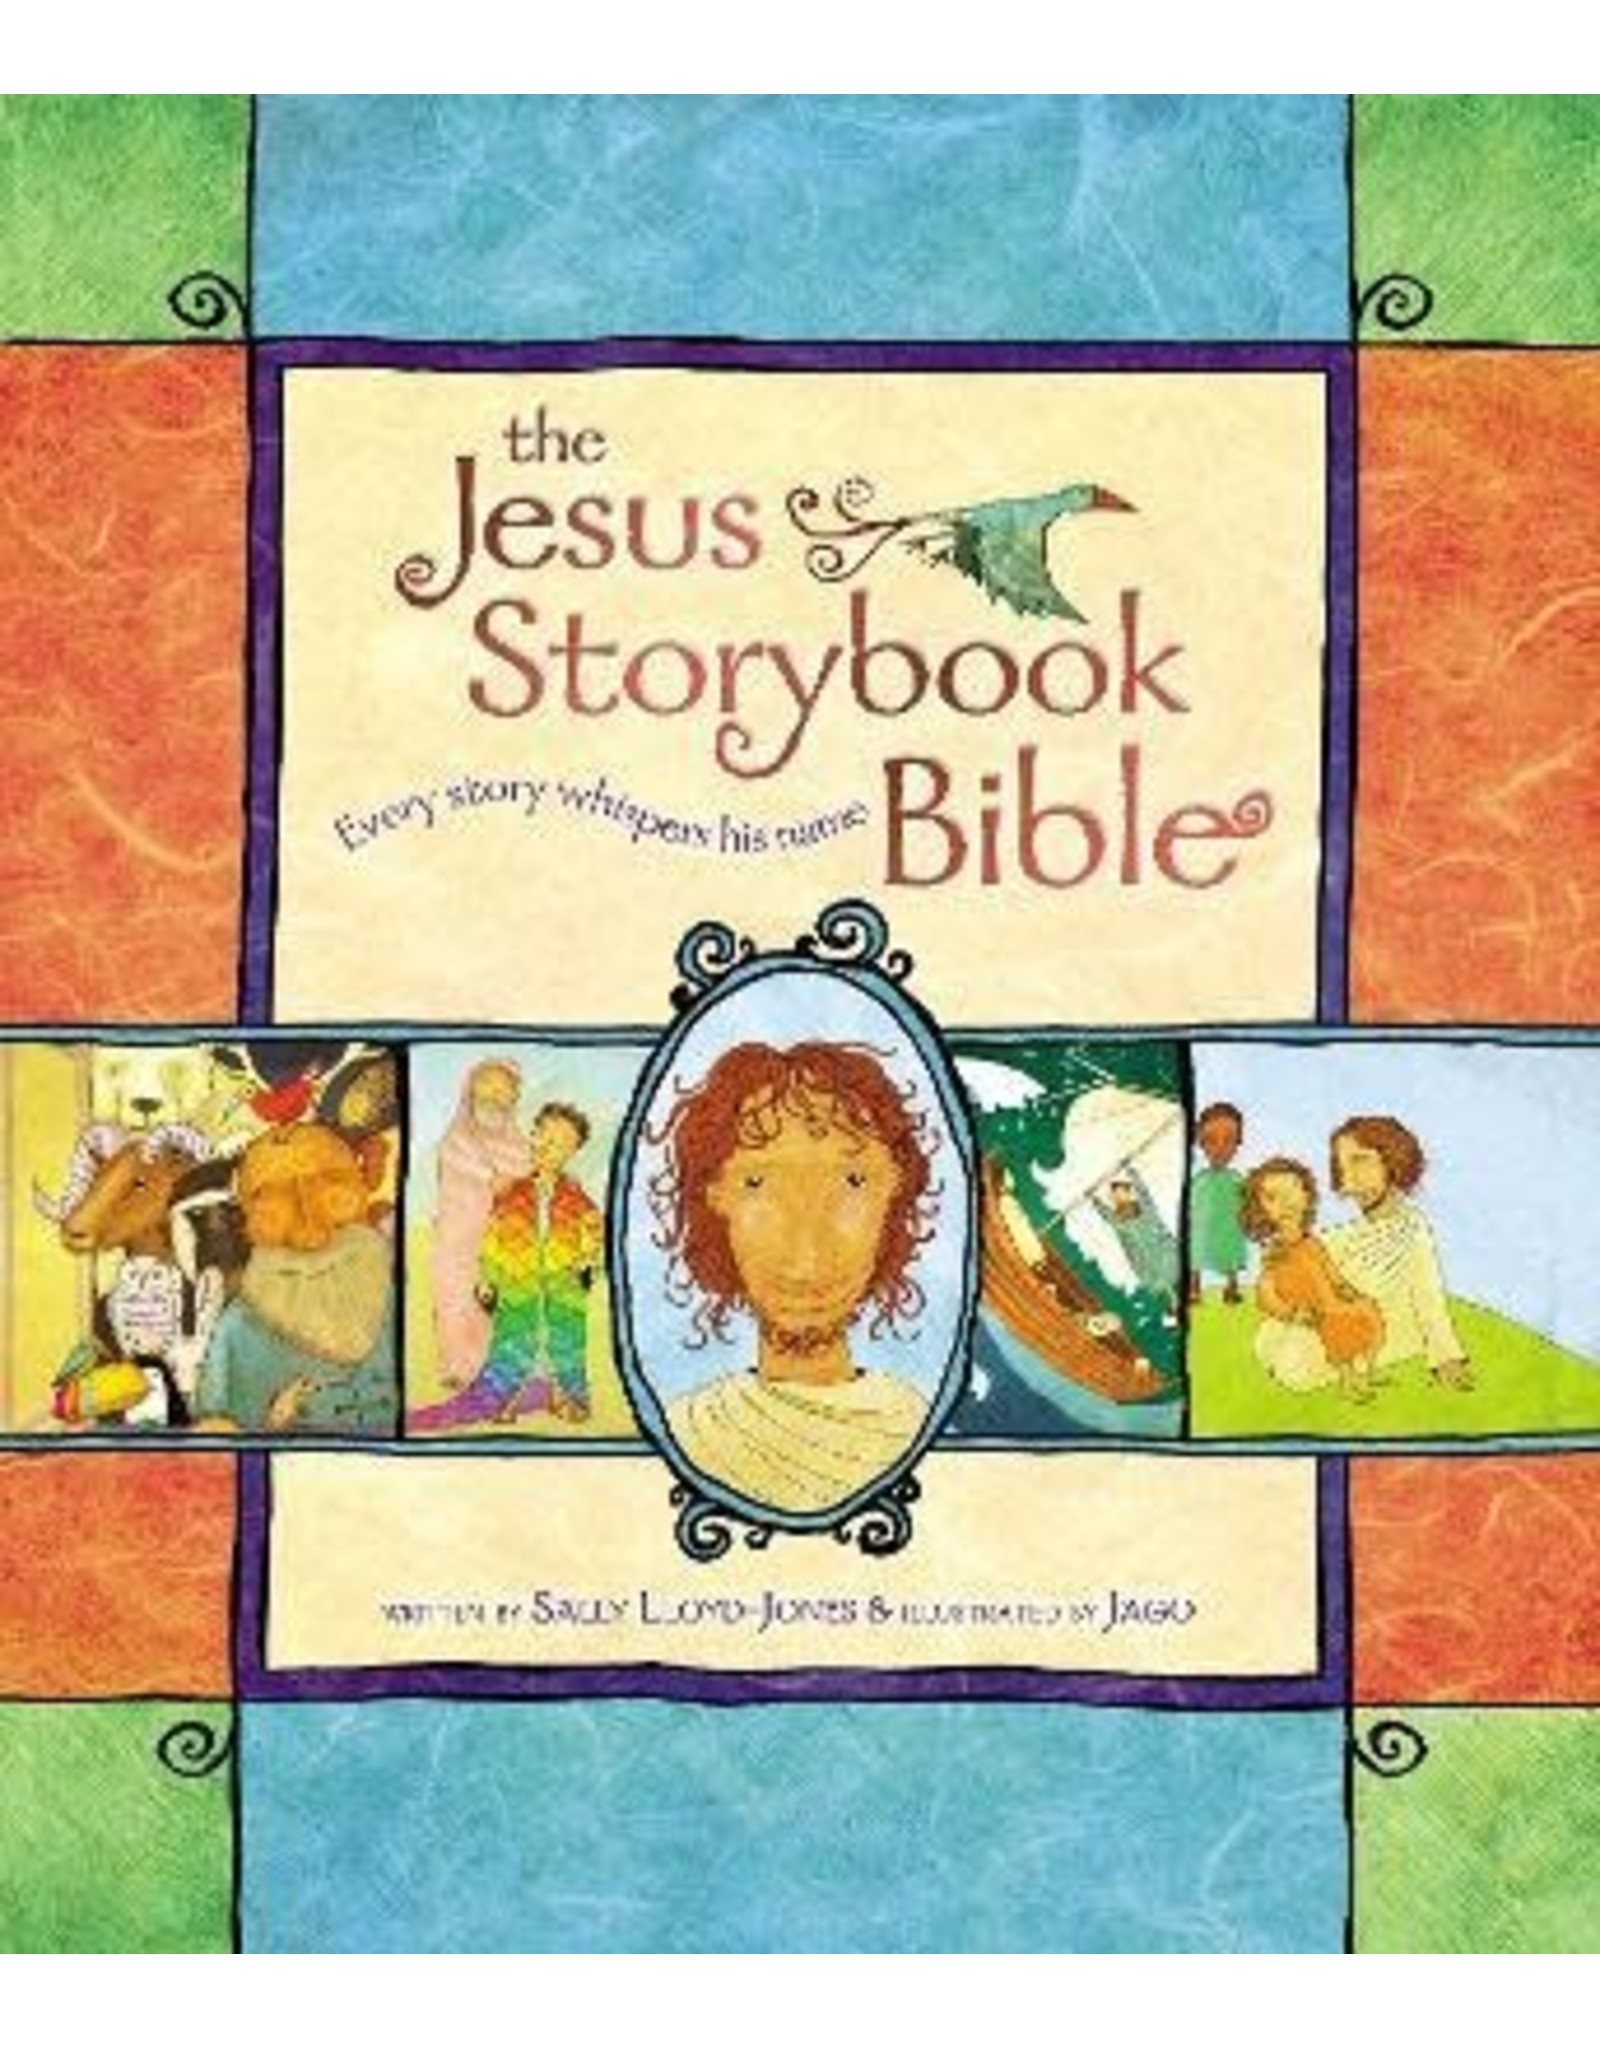 Sally Lloyd Jones The Jesus Storybook Bible HC